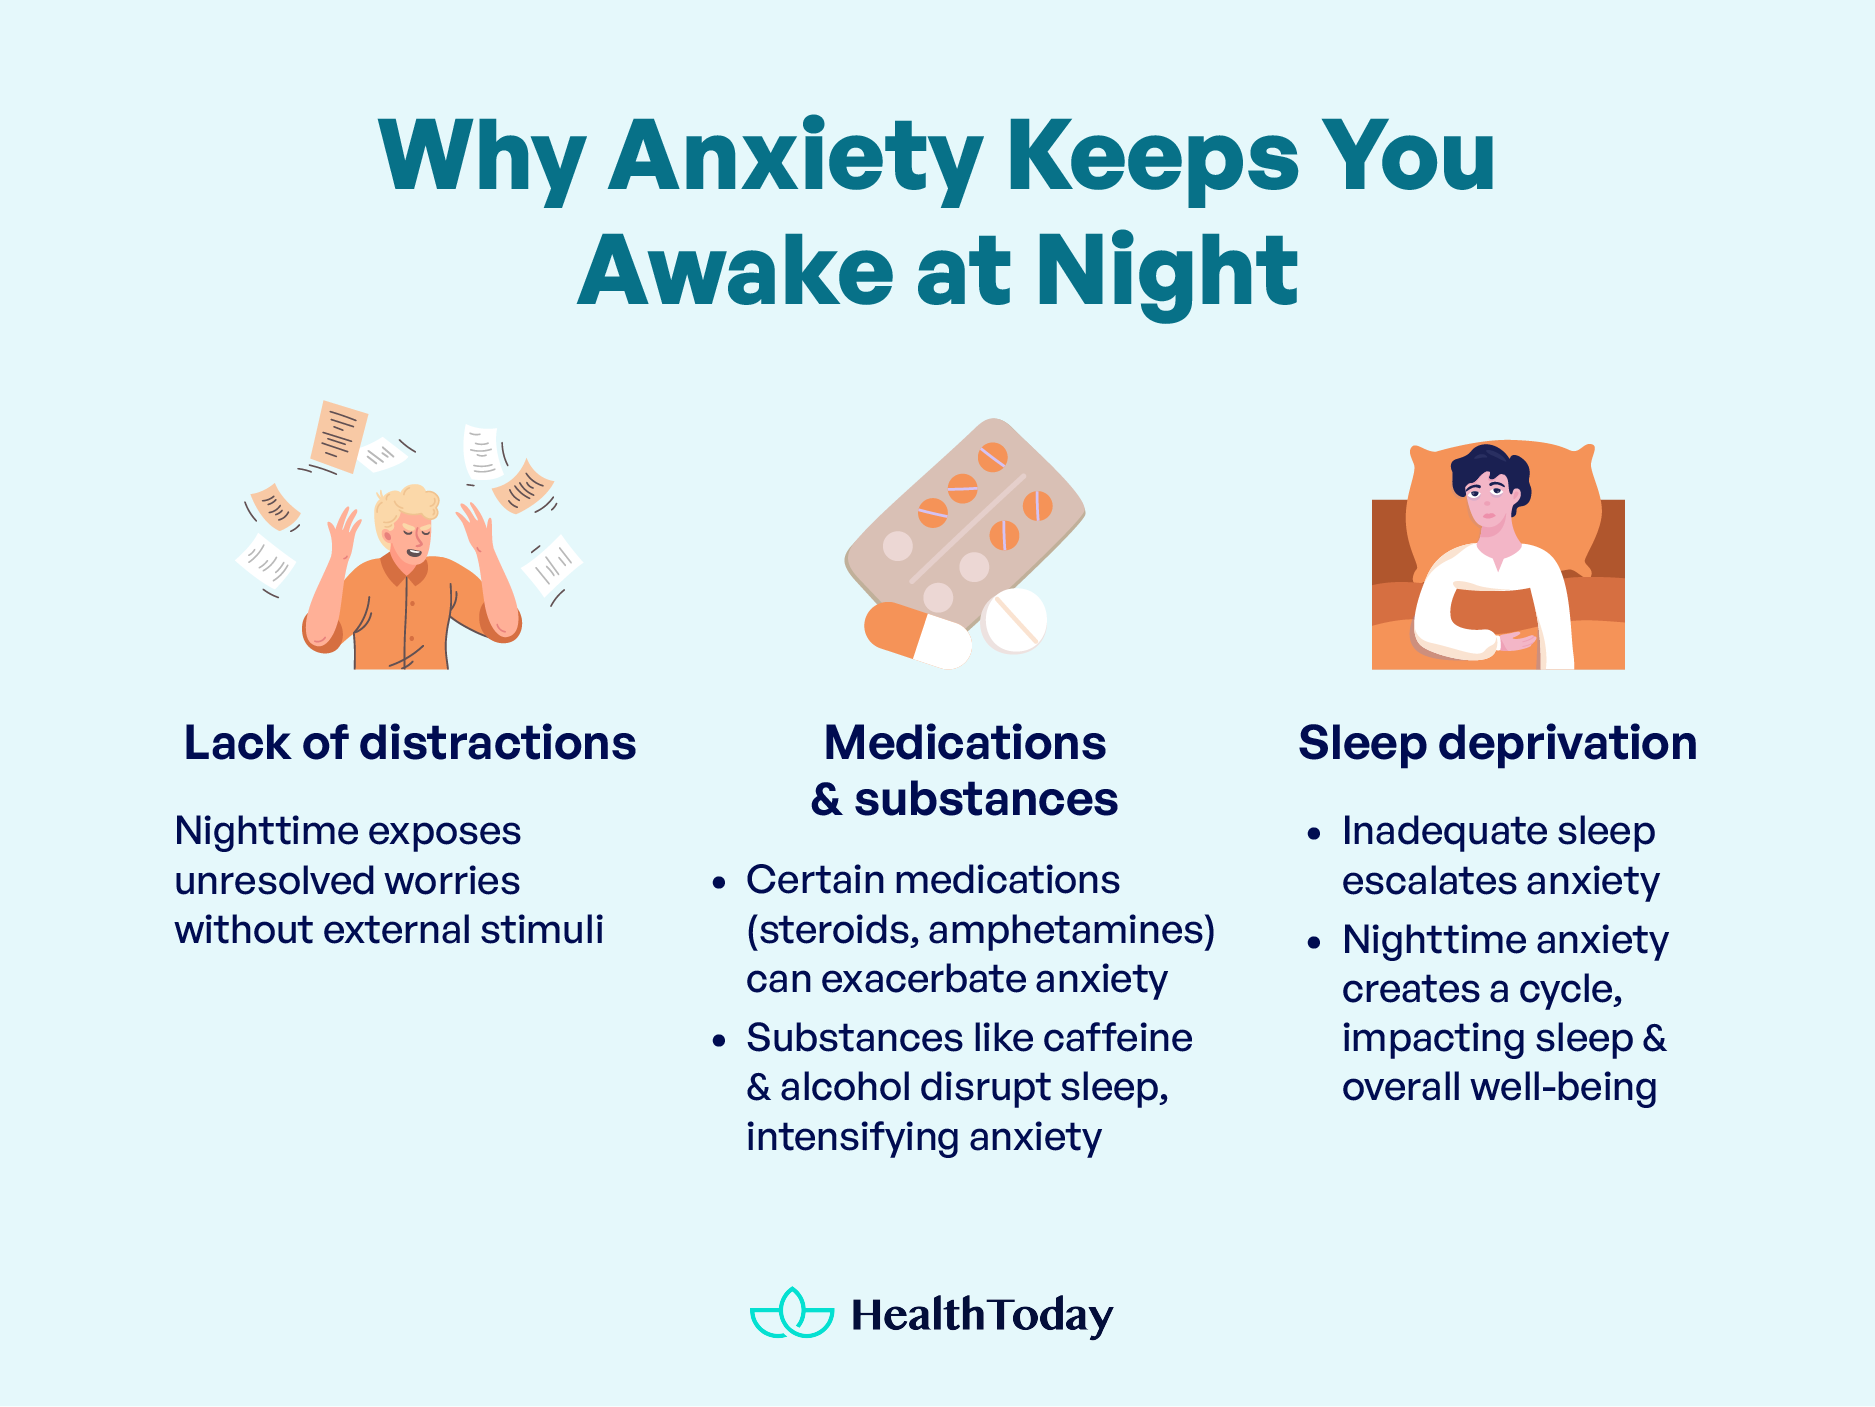 Why anxiety keeps you awake